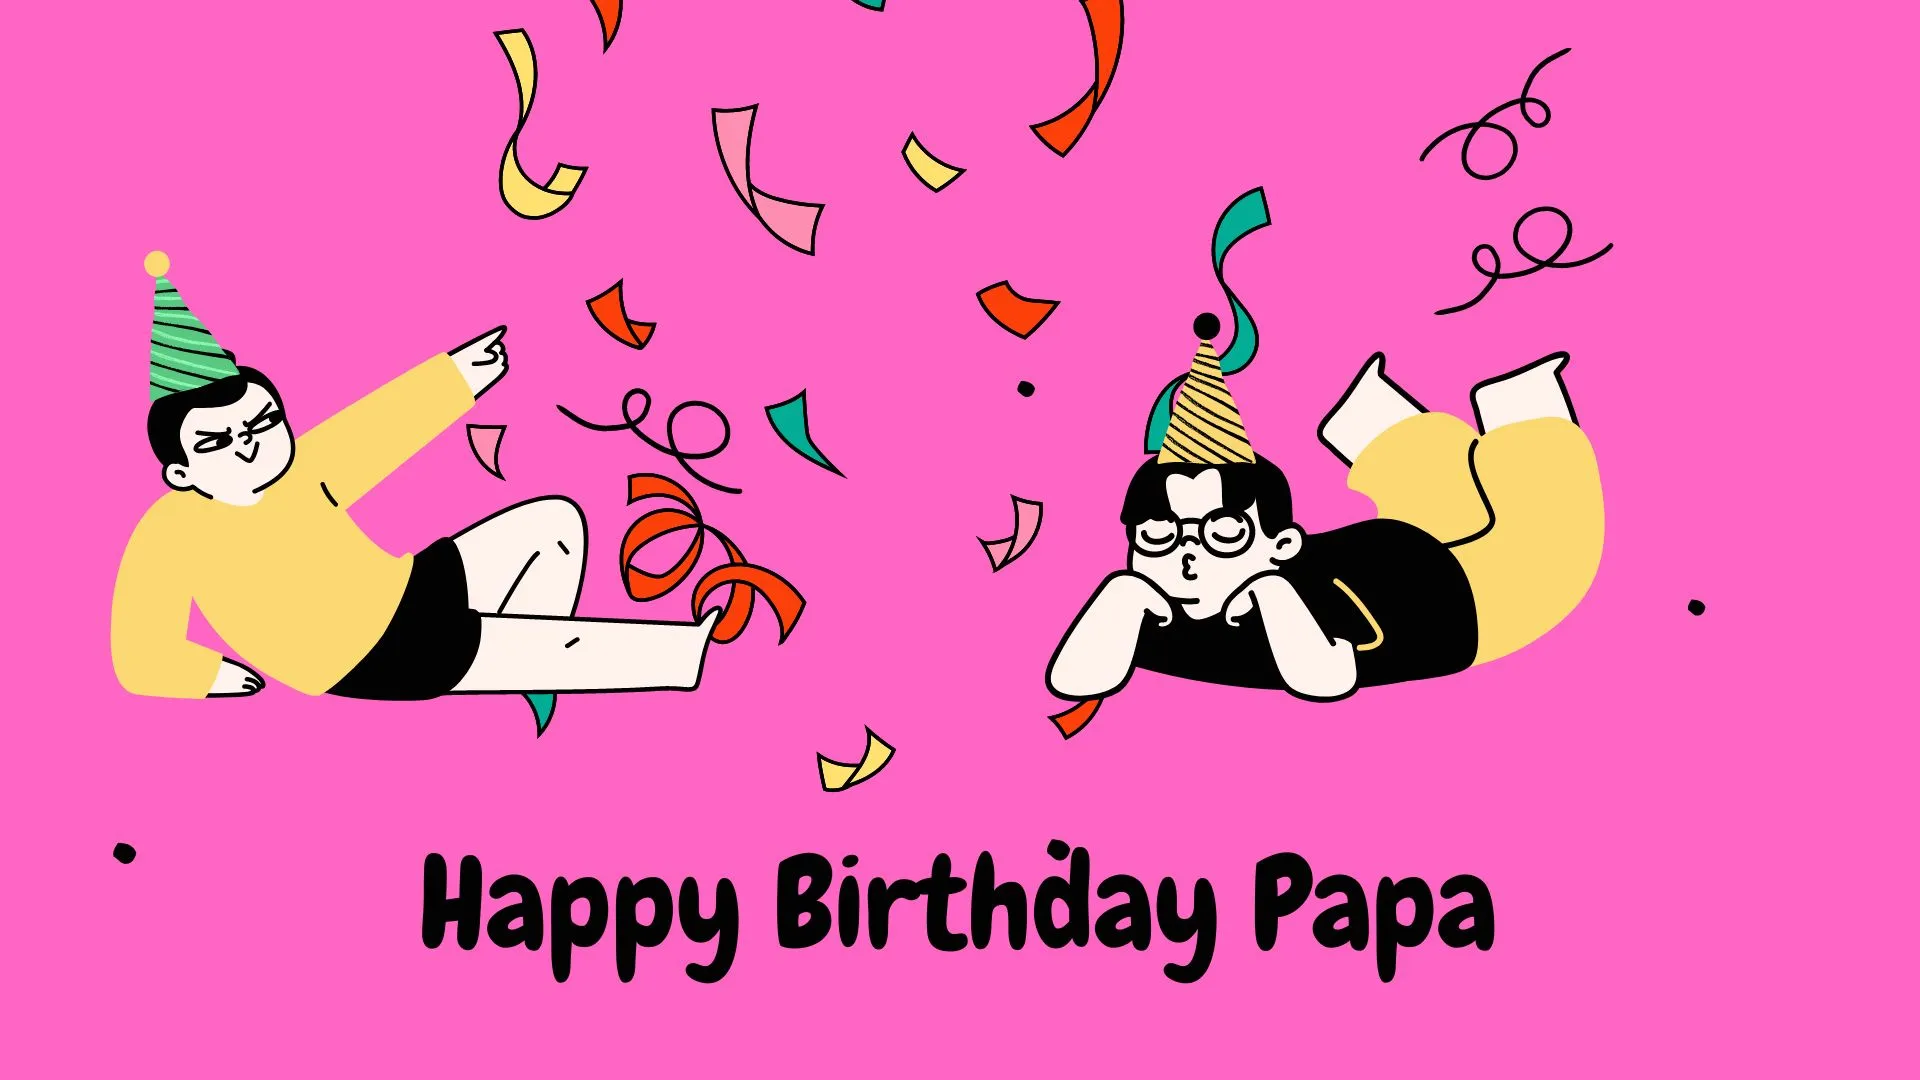 Happy Birthday Papa Wishes